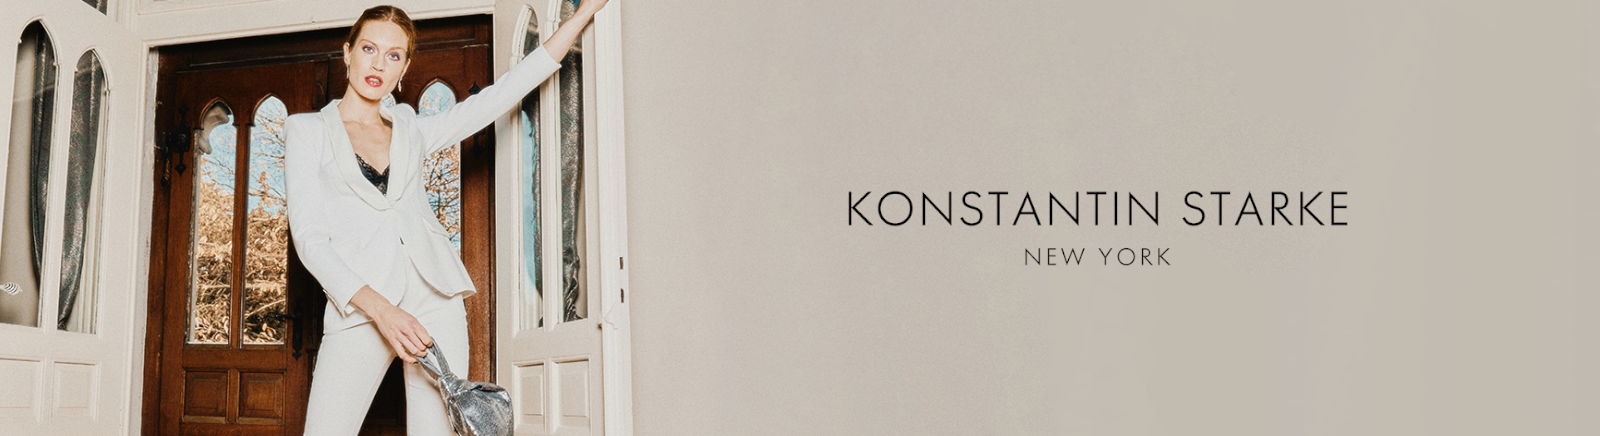 Prange: Konstantin Starke Plateau-Stiefeletten für Damen online shoppen